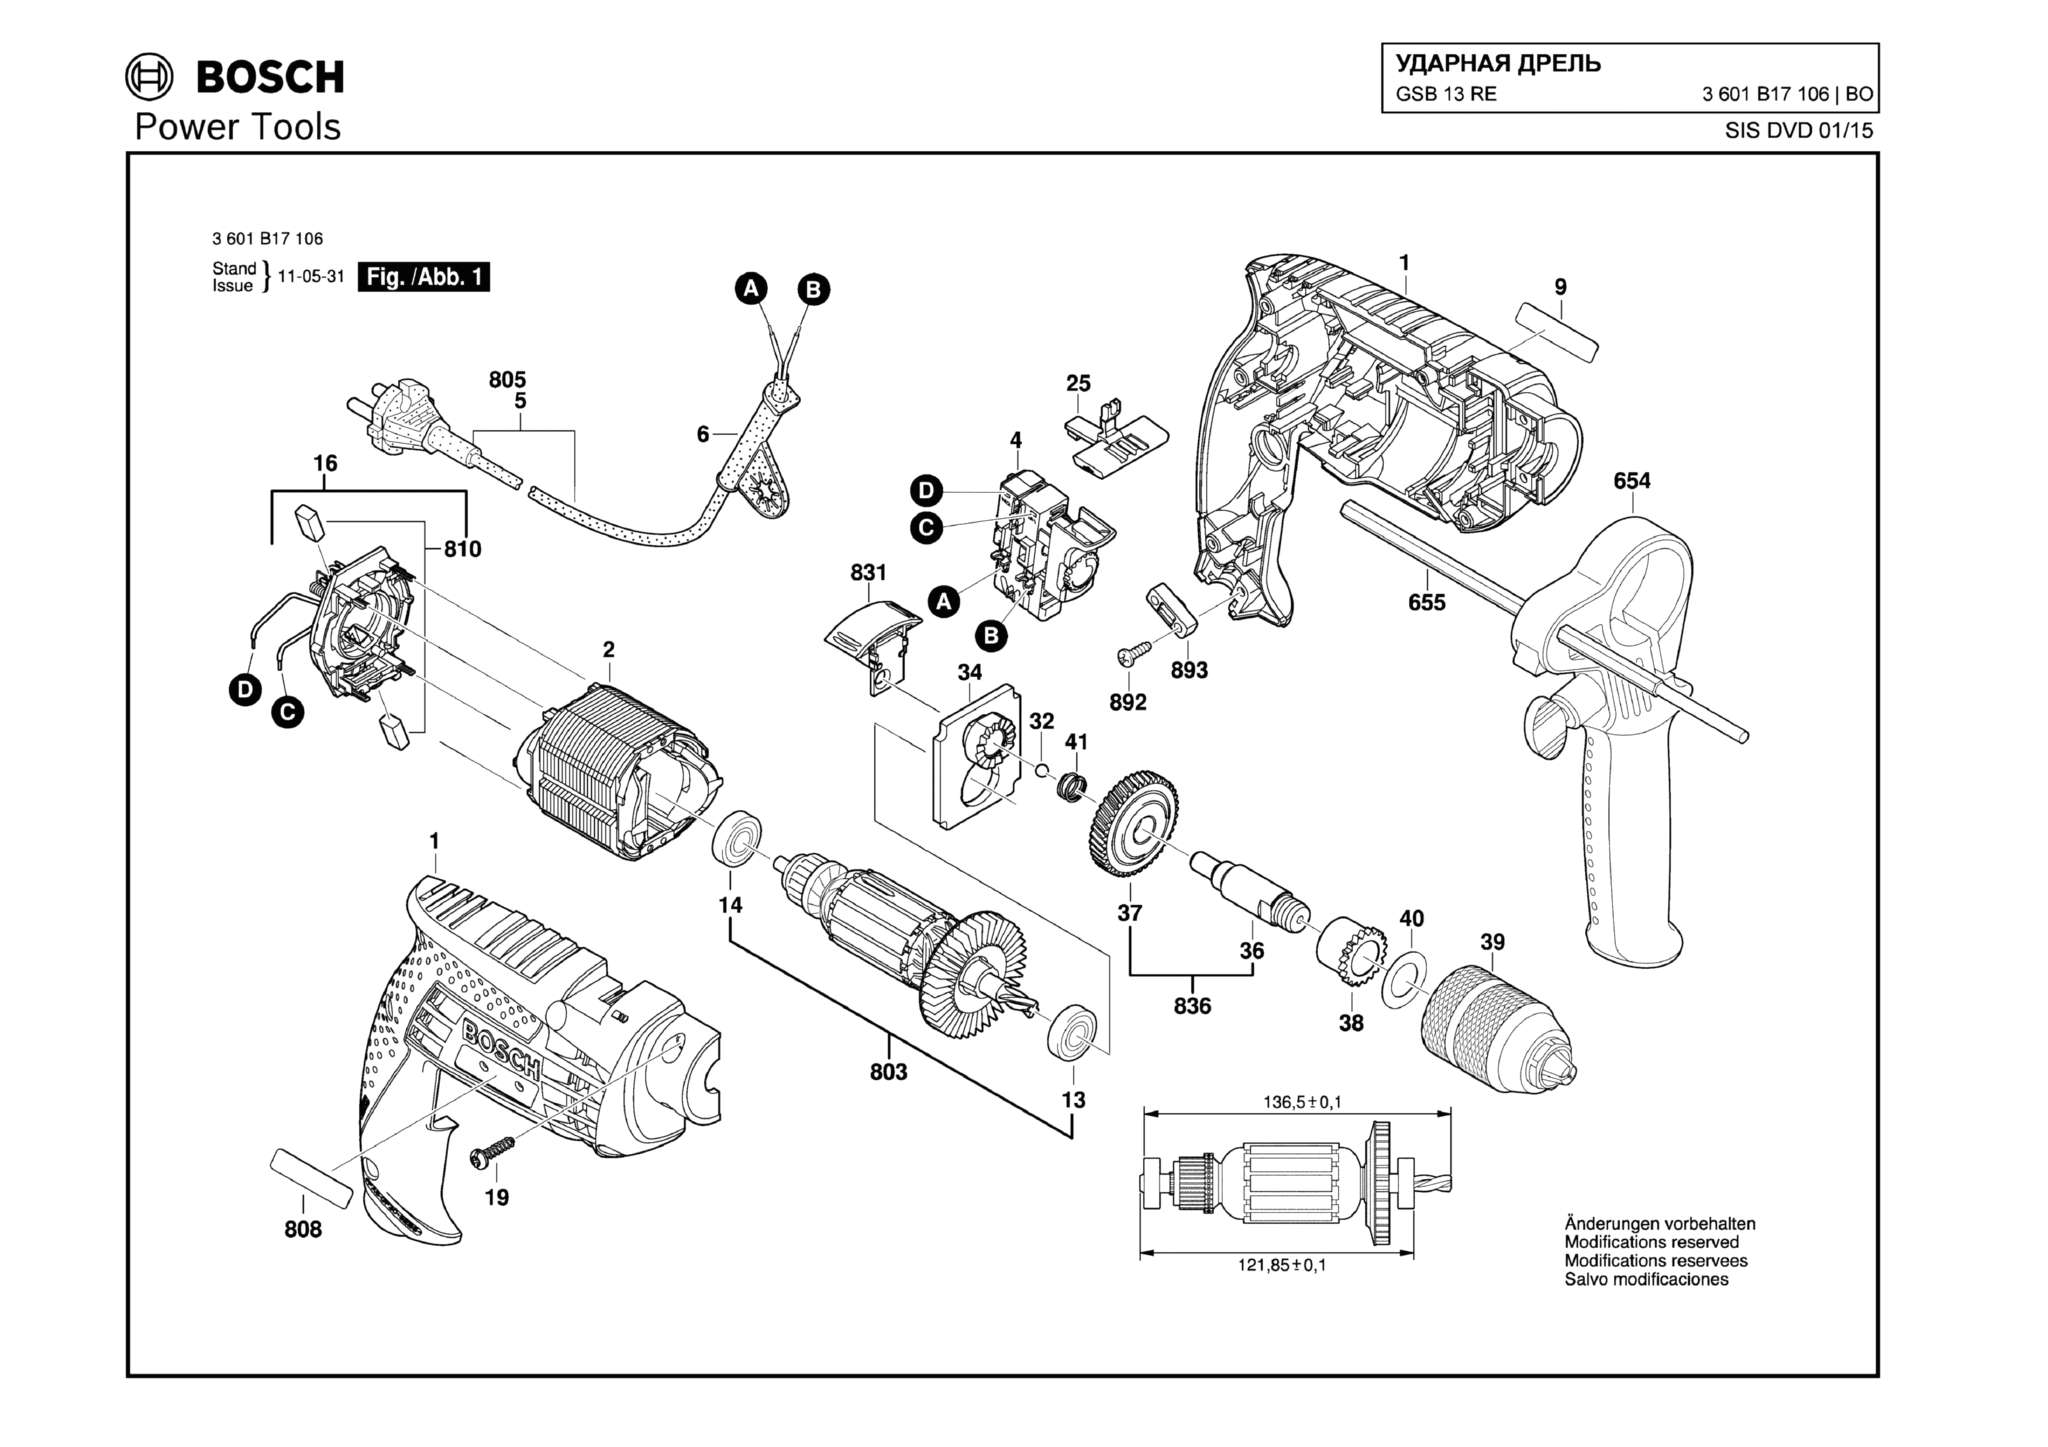 Запчасти, схема и деталировка Bosch GSB 13 RE (ТИП 3601B17106)